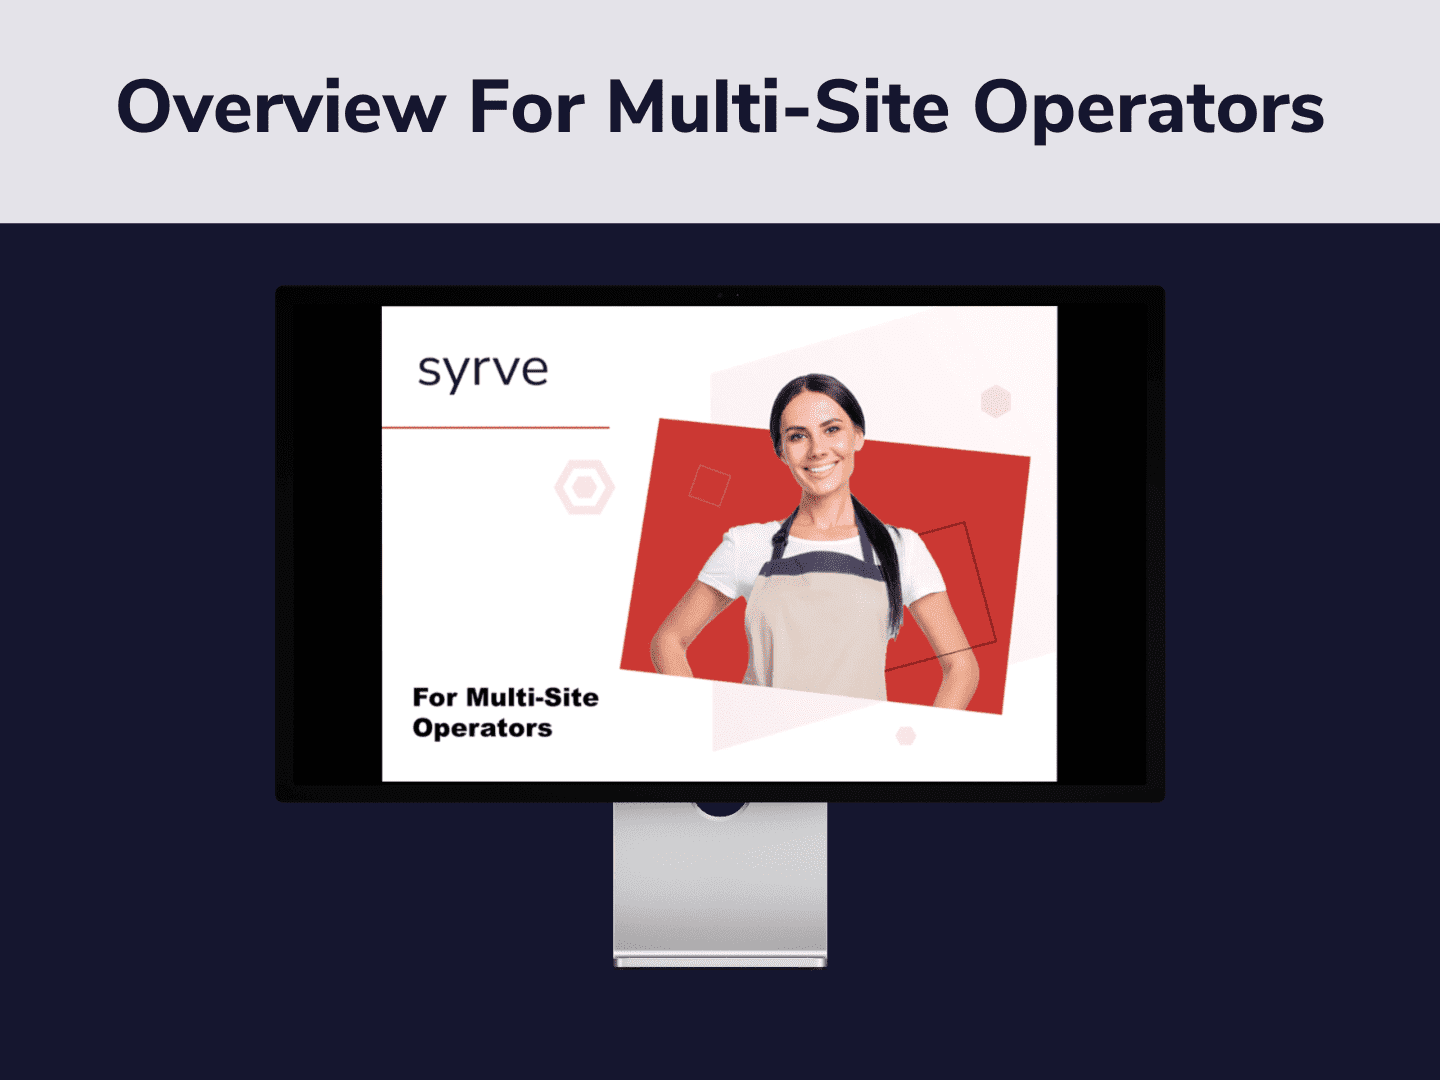 Overview For Multi-Site Operators